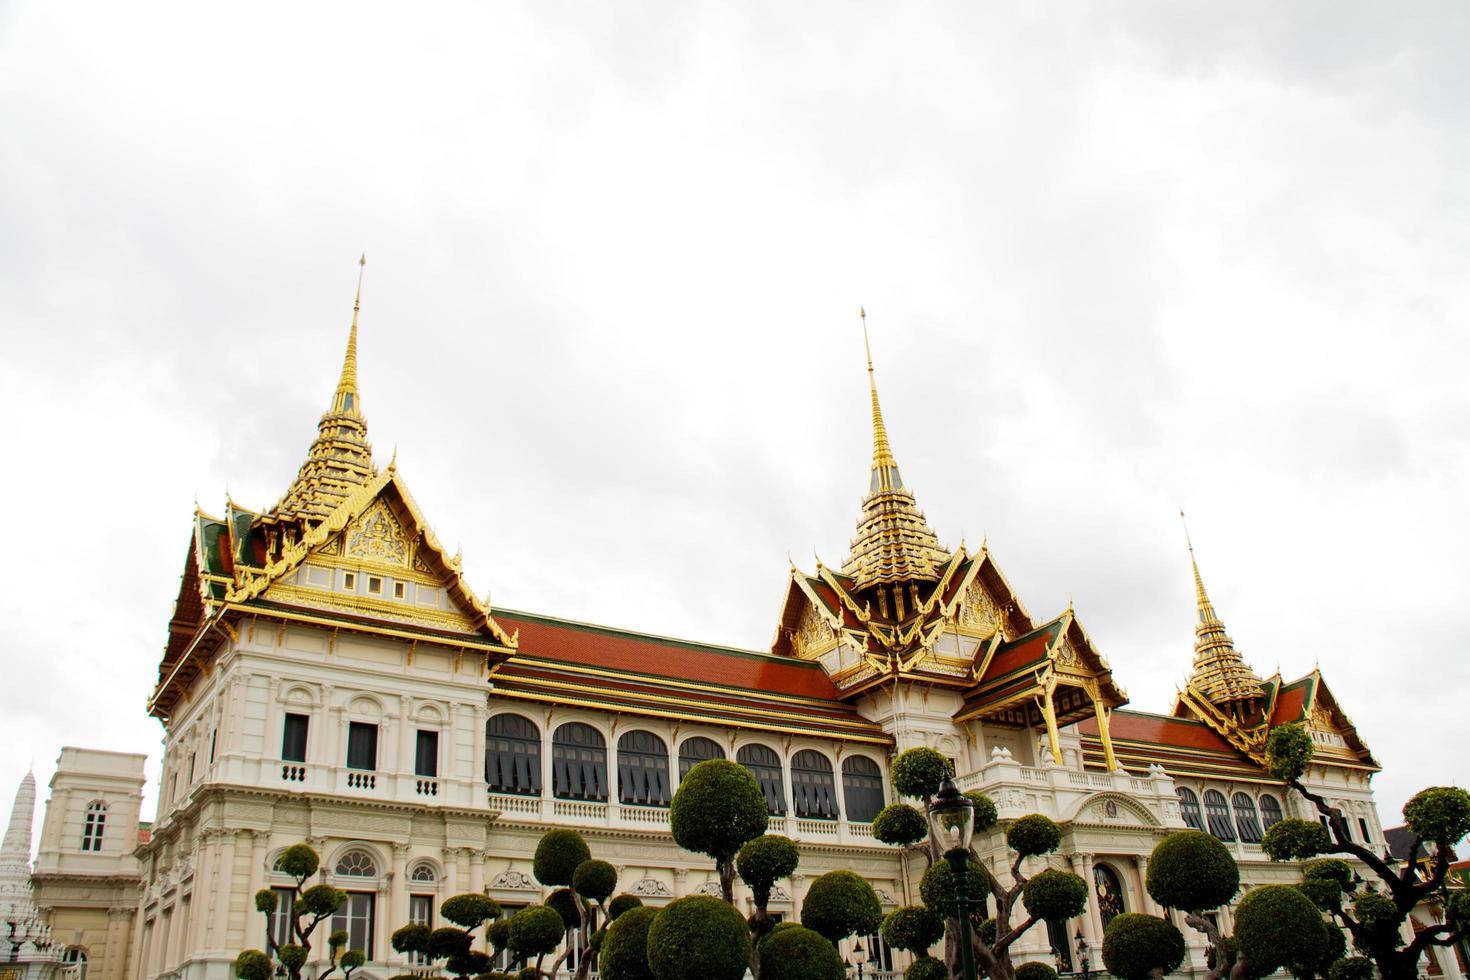 detalj av grand palace i bangkok, thailand foto